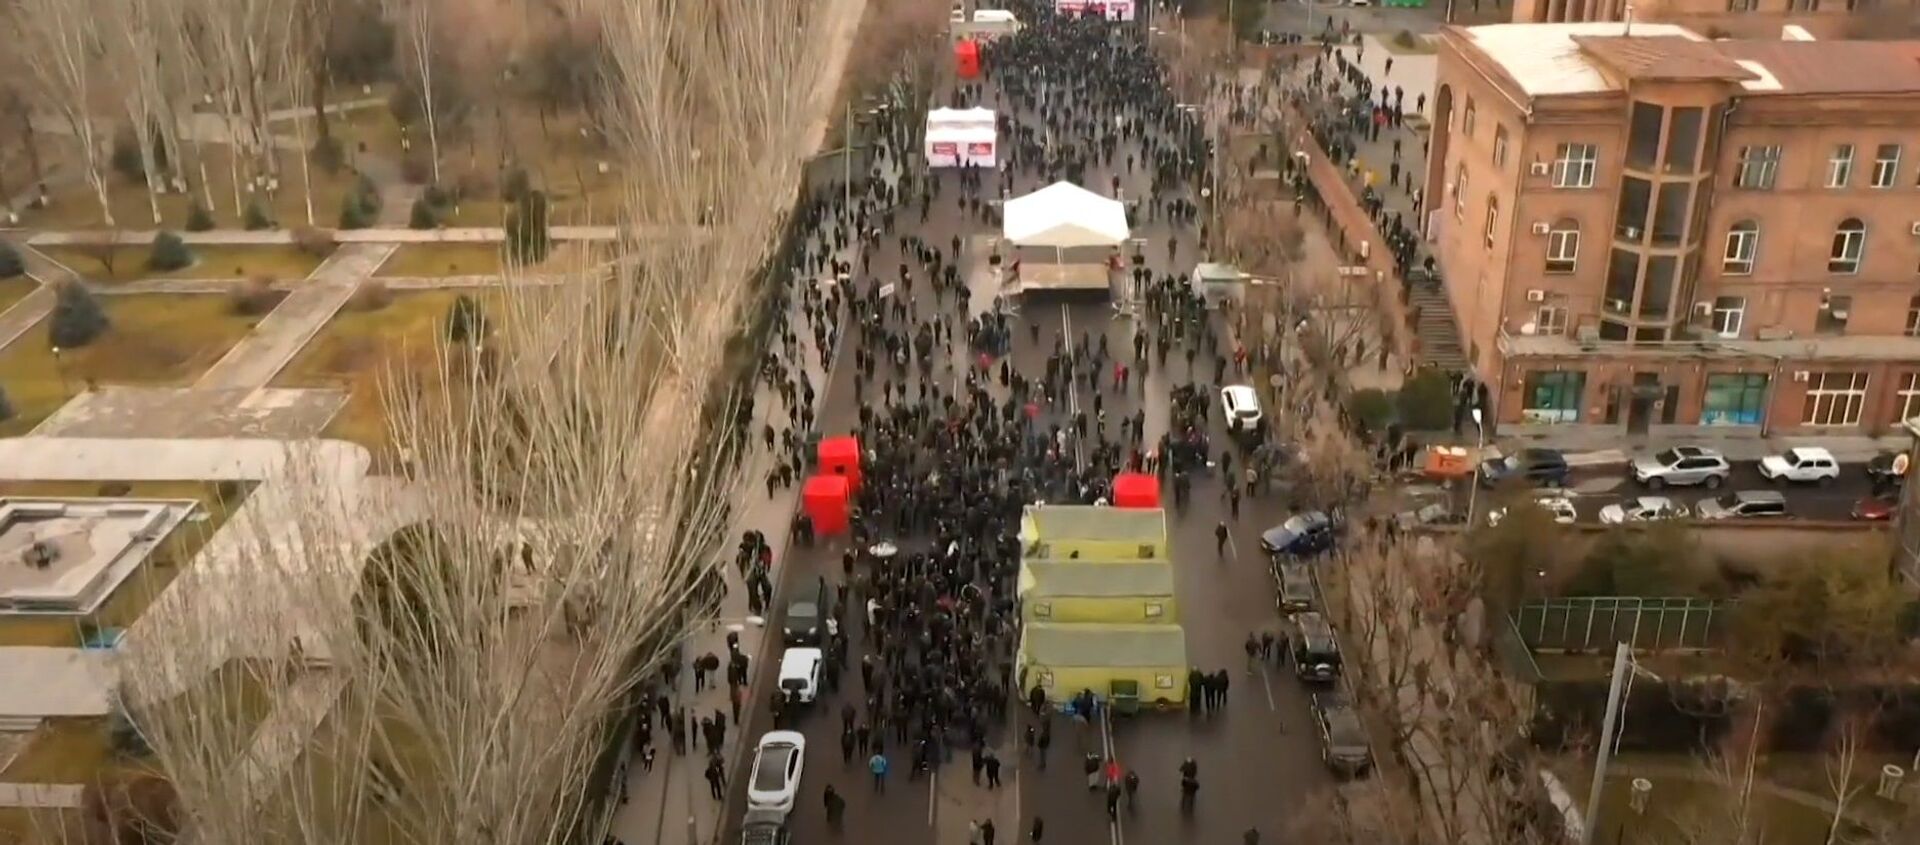 Armenia: Drone footage captures pro and anti-PM Pashinyan protests in Yerevan streets - Sputnik Молдова, 1920, 02.03.2021